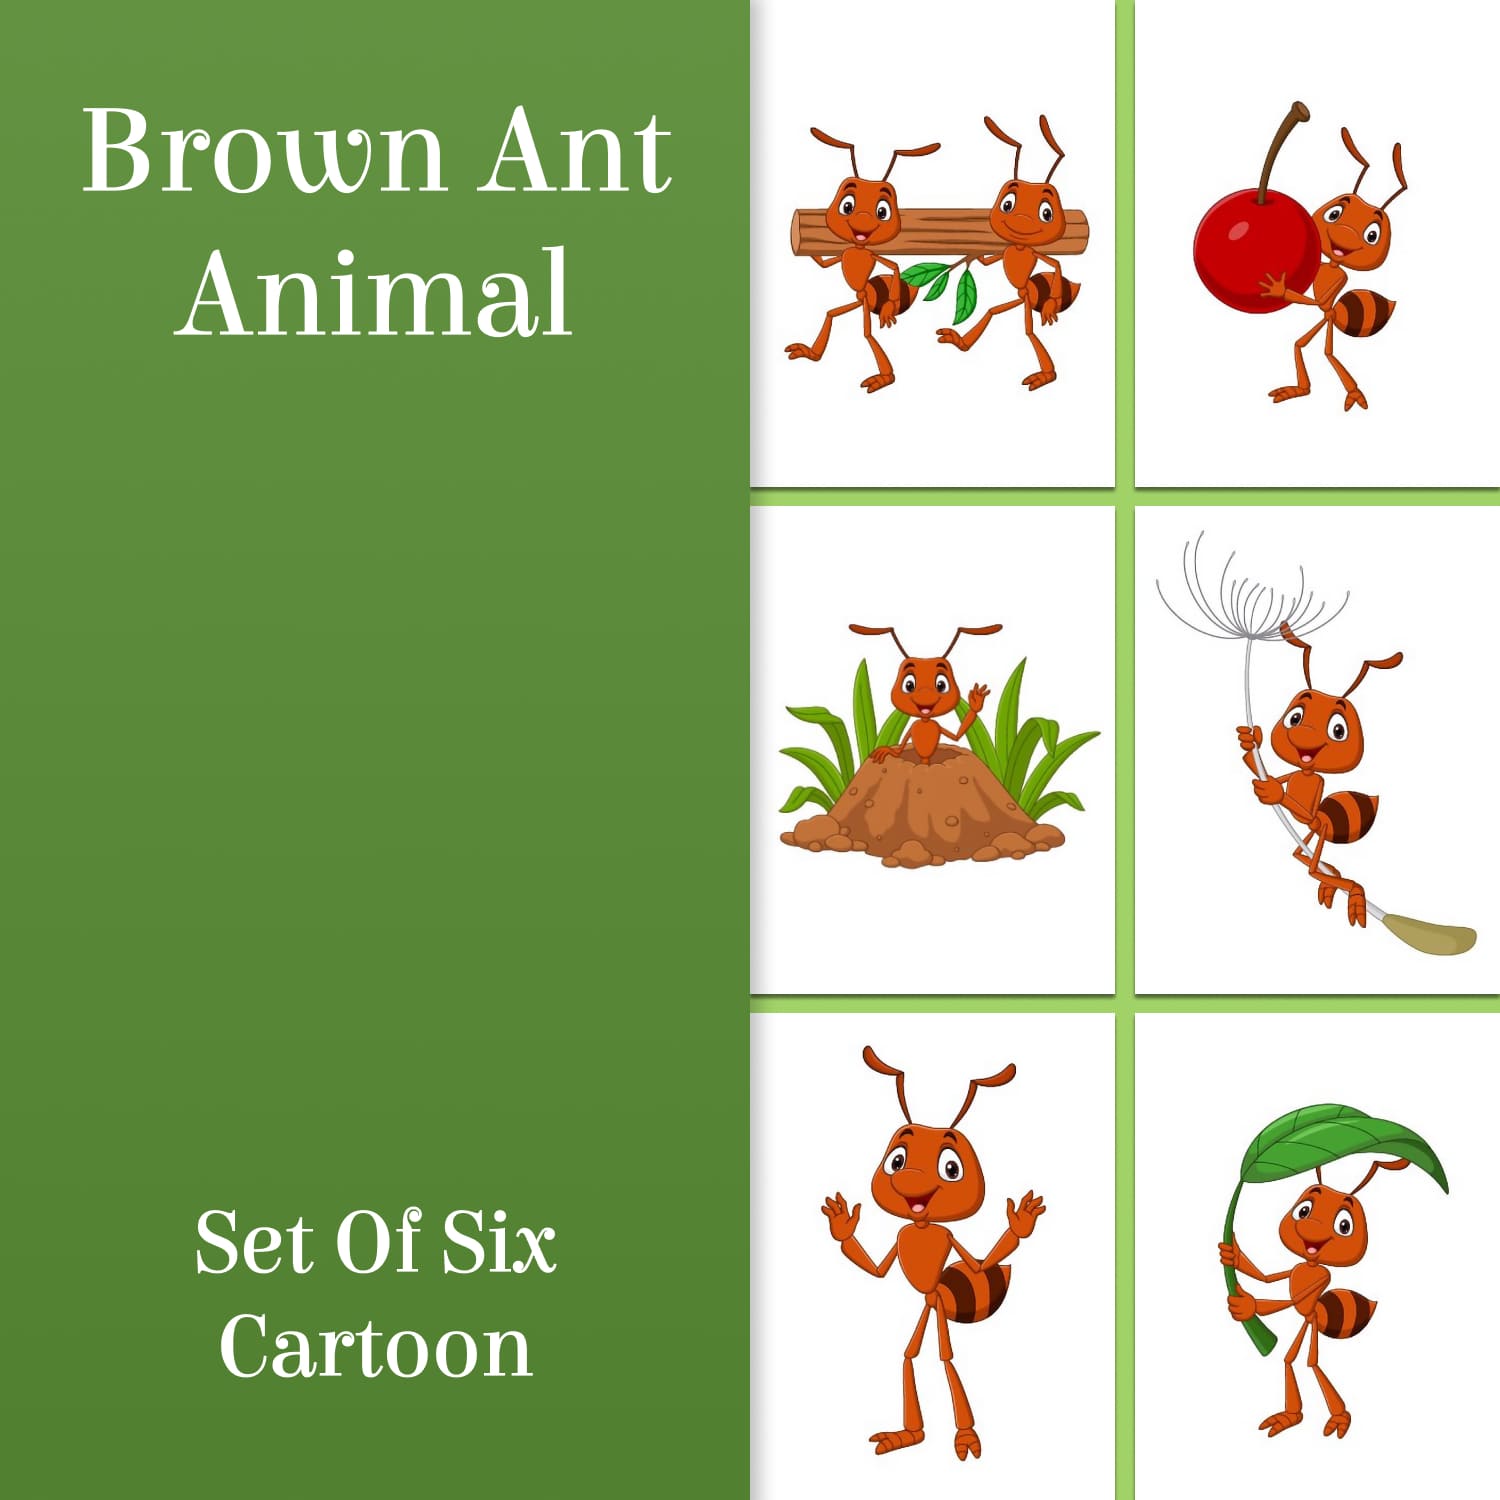 Set of Six Cartoon Brown Ant Animal.